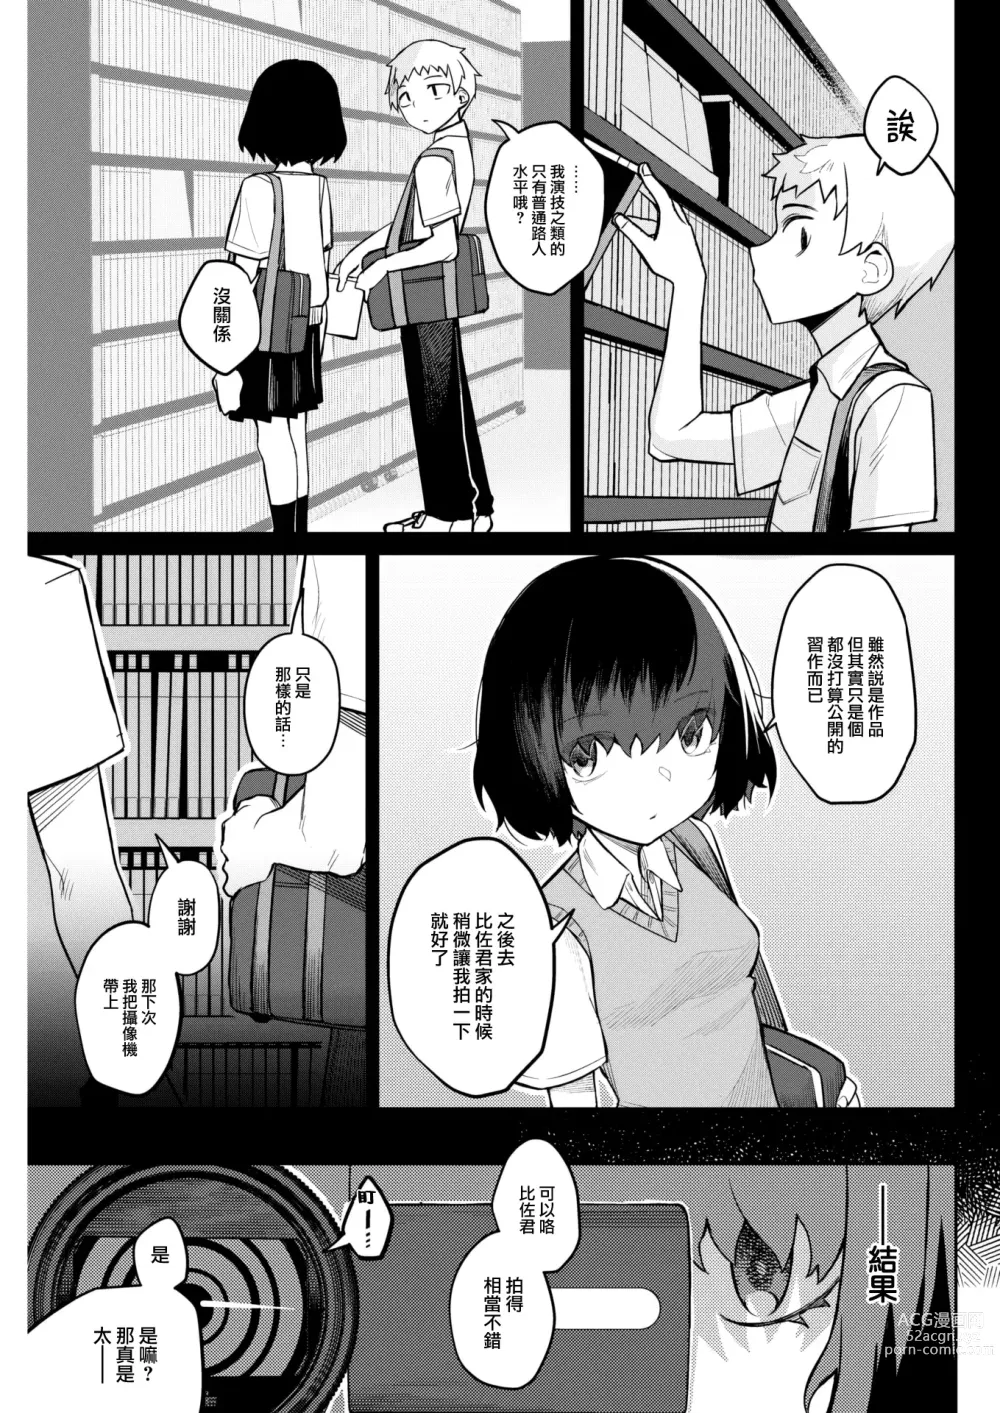 Page 4 of manga Doridorare